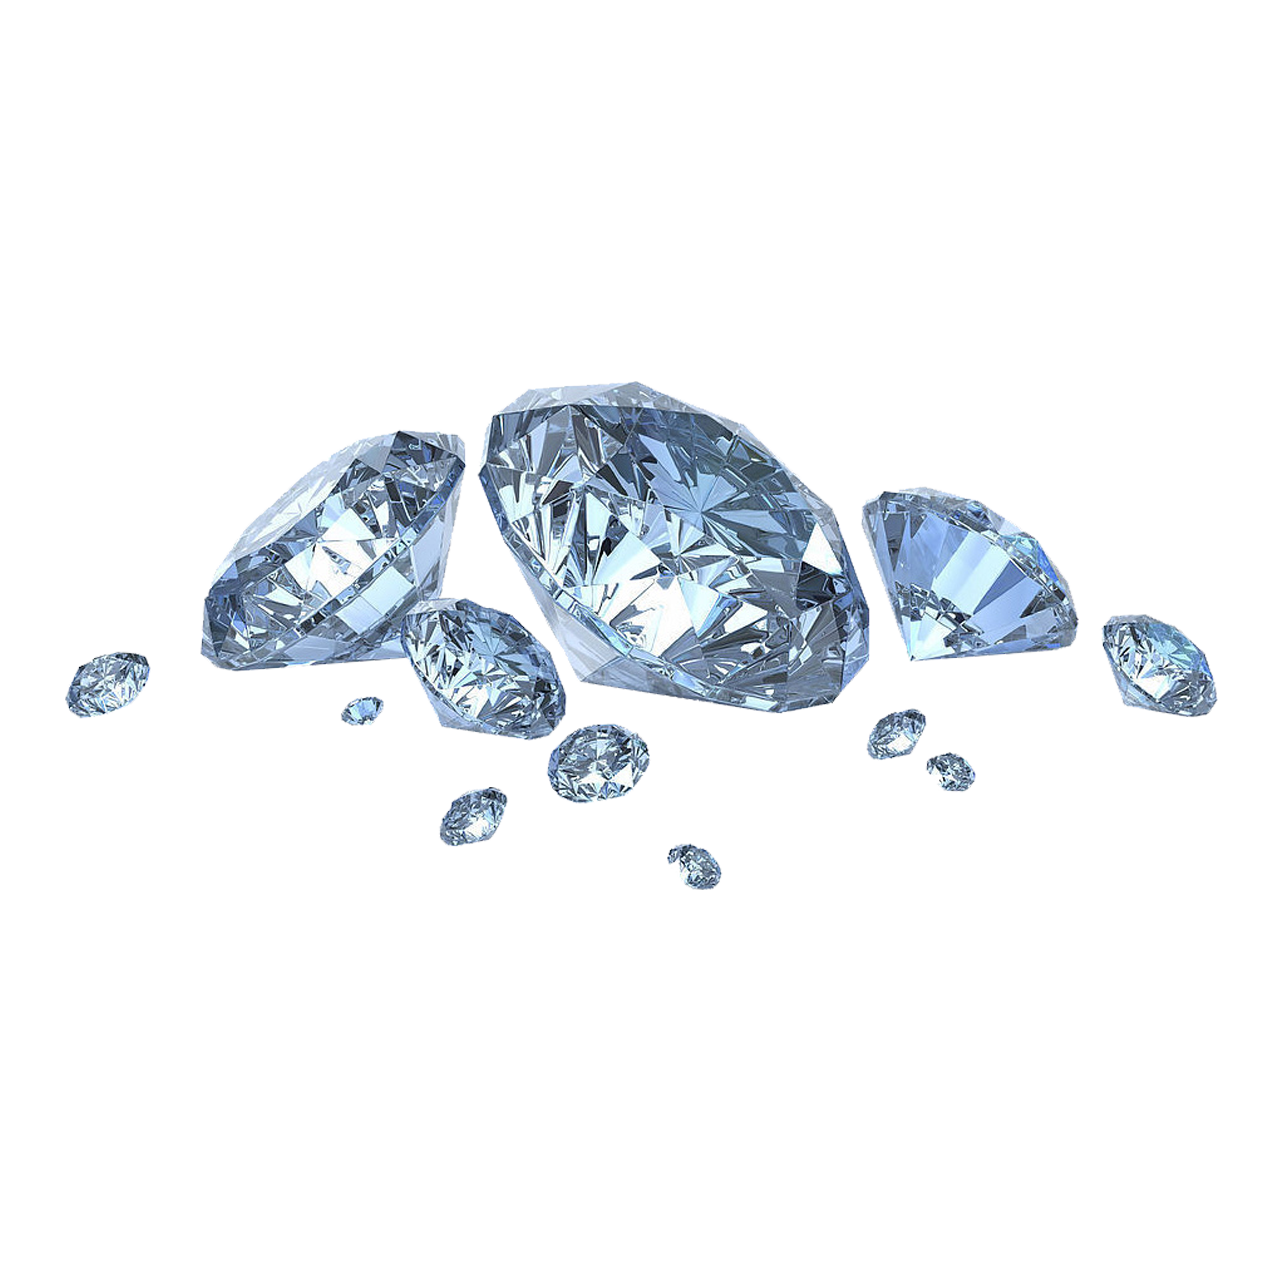 Clarity Cut Diamond Gemstone Jewellery PNG File HD Clipart